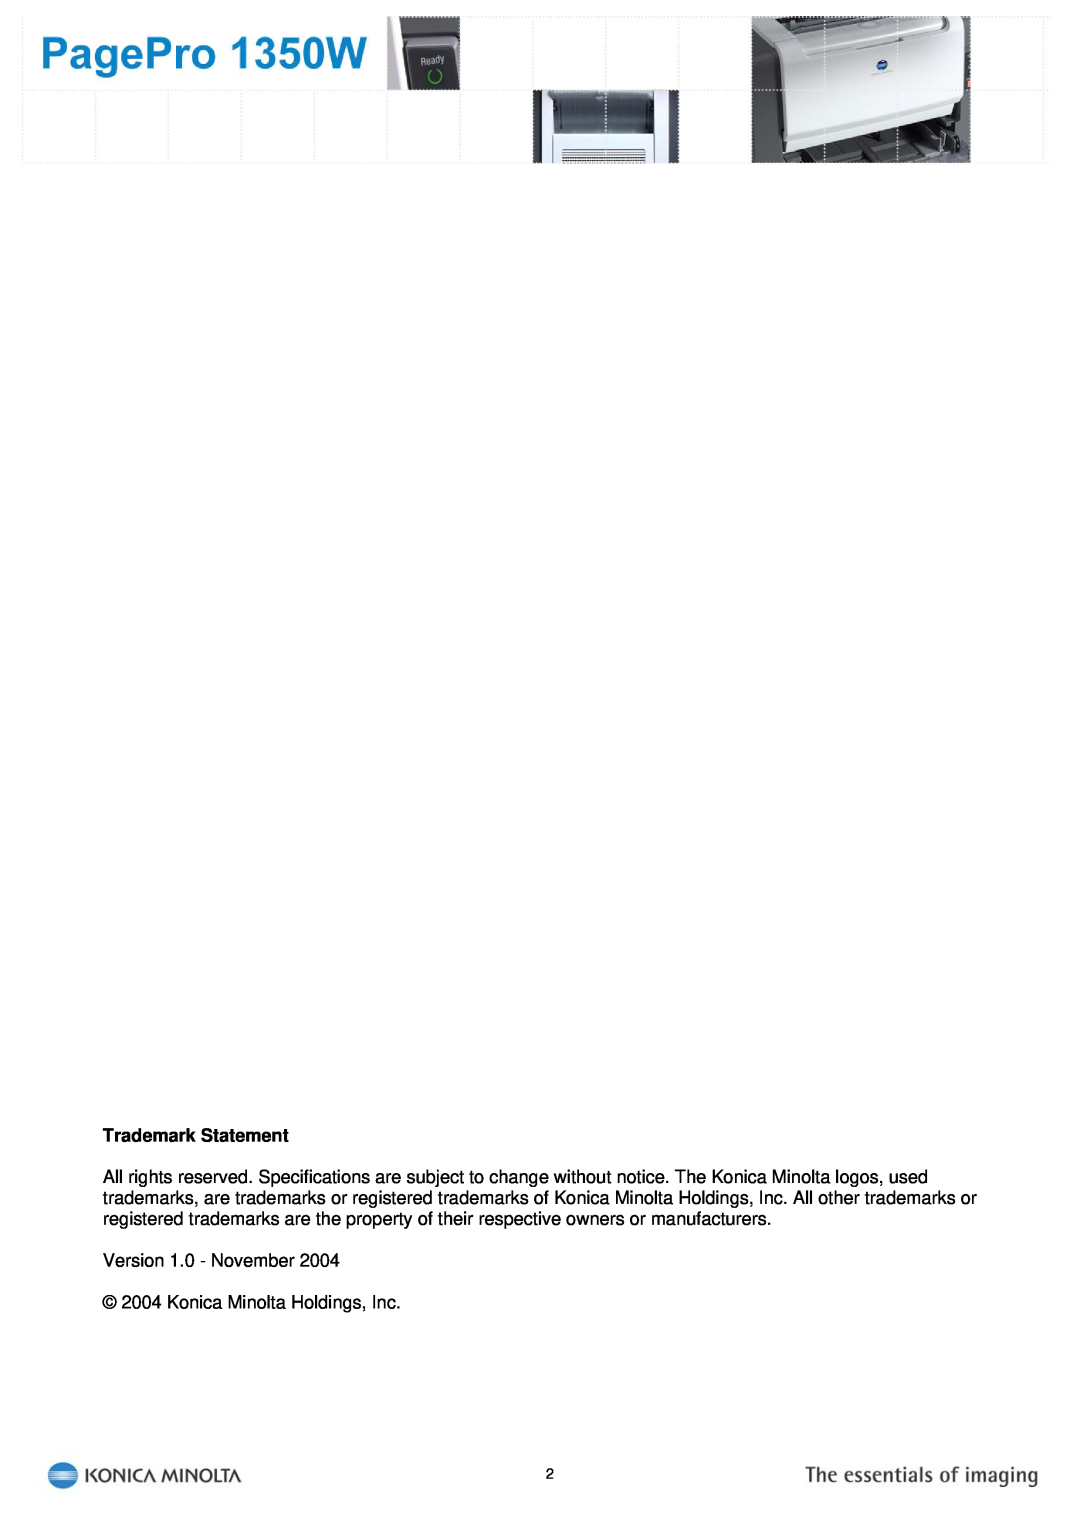 Konica Minolta PagePro 1350W manual Trademark Statement, Version 1.0 - November 2004 Konica Minolta Holdings, Inc 